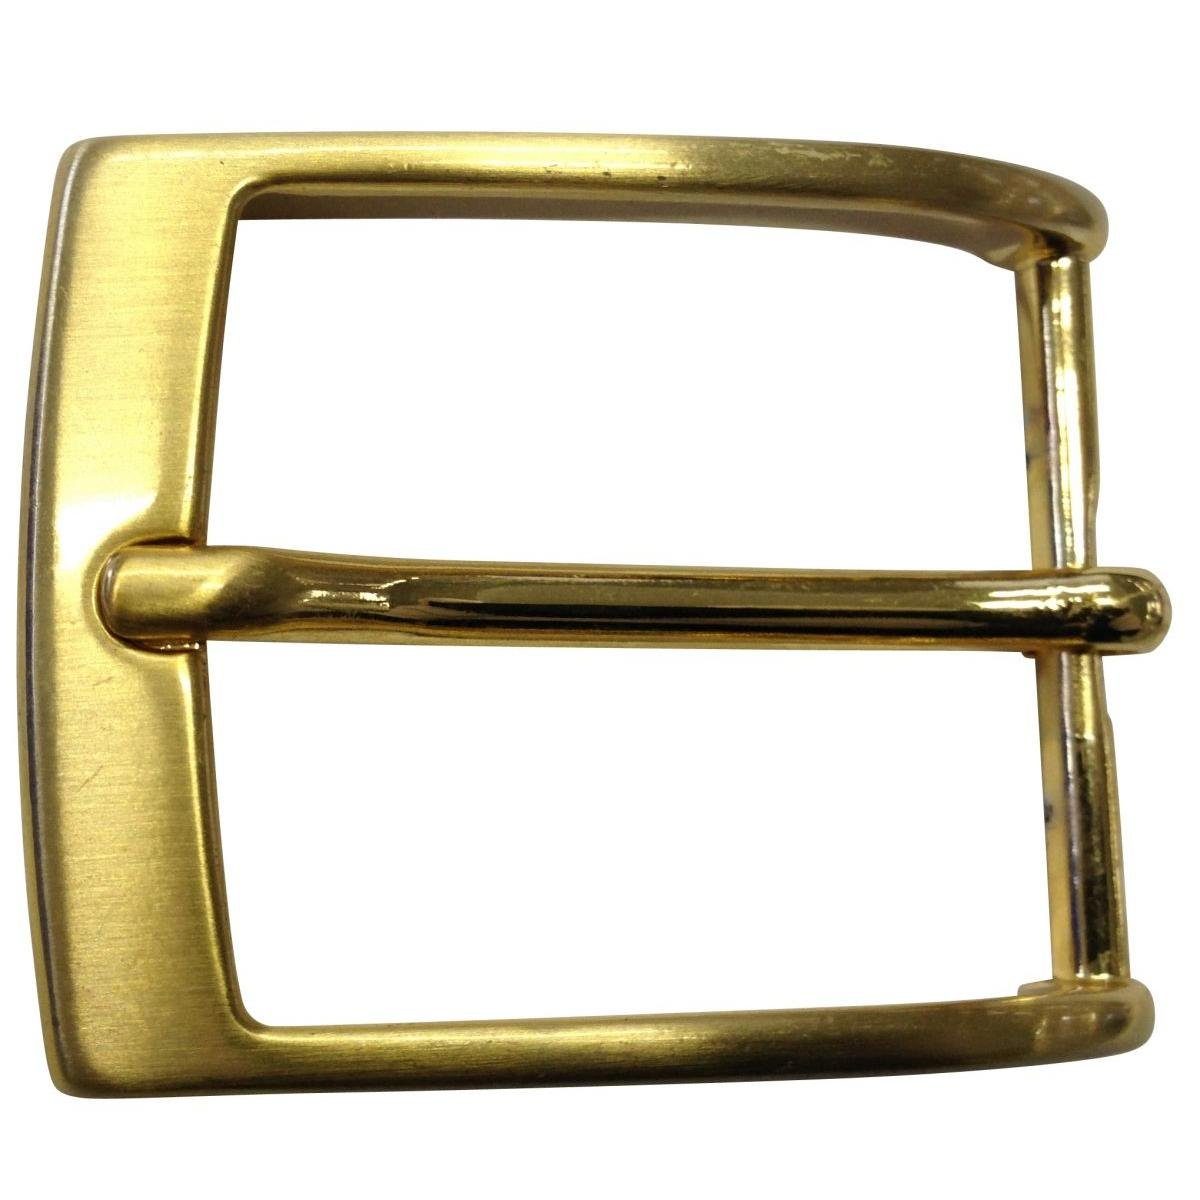 BELTINGER Gürtelschnalle 3,5 cm - Gürtelschließe 35mm - Dorn-Schließe - Für Gürtel 3.5cm Gold, Matt